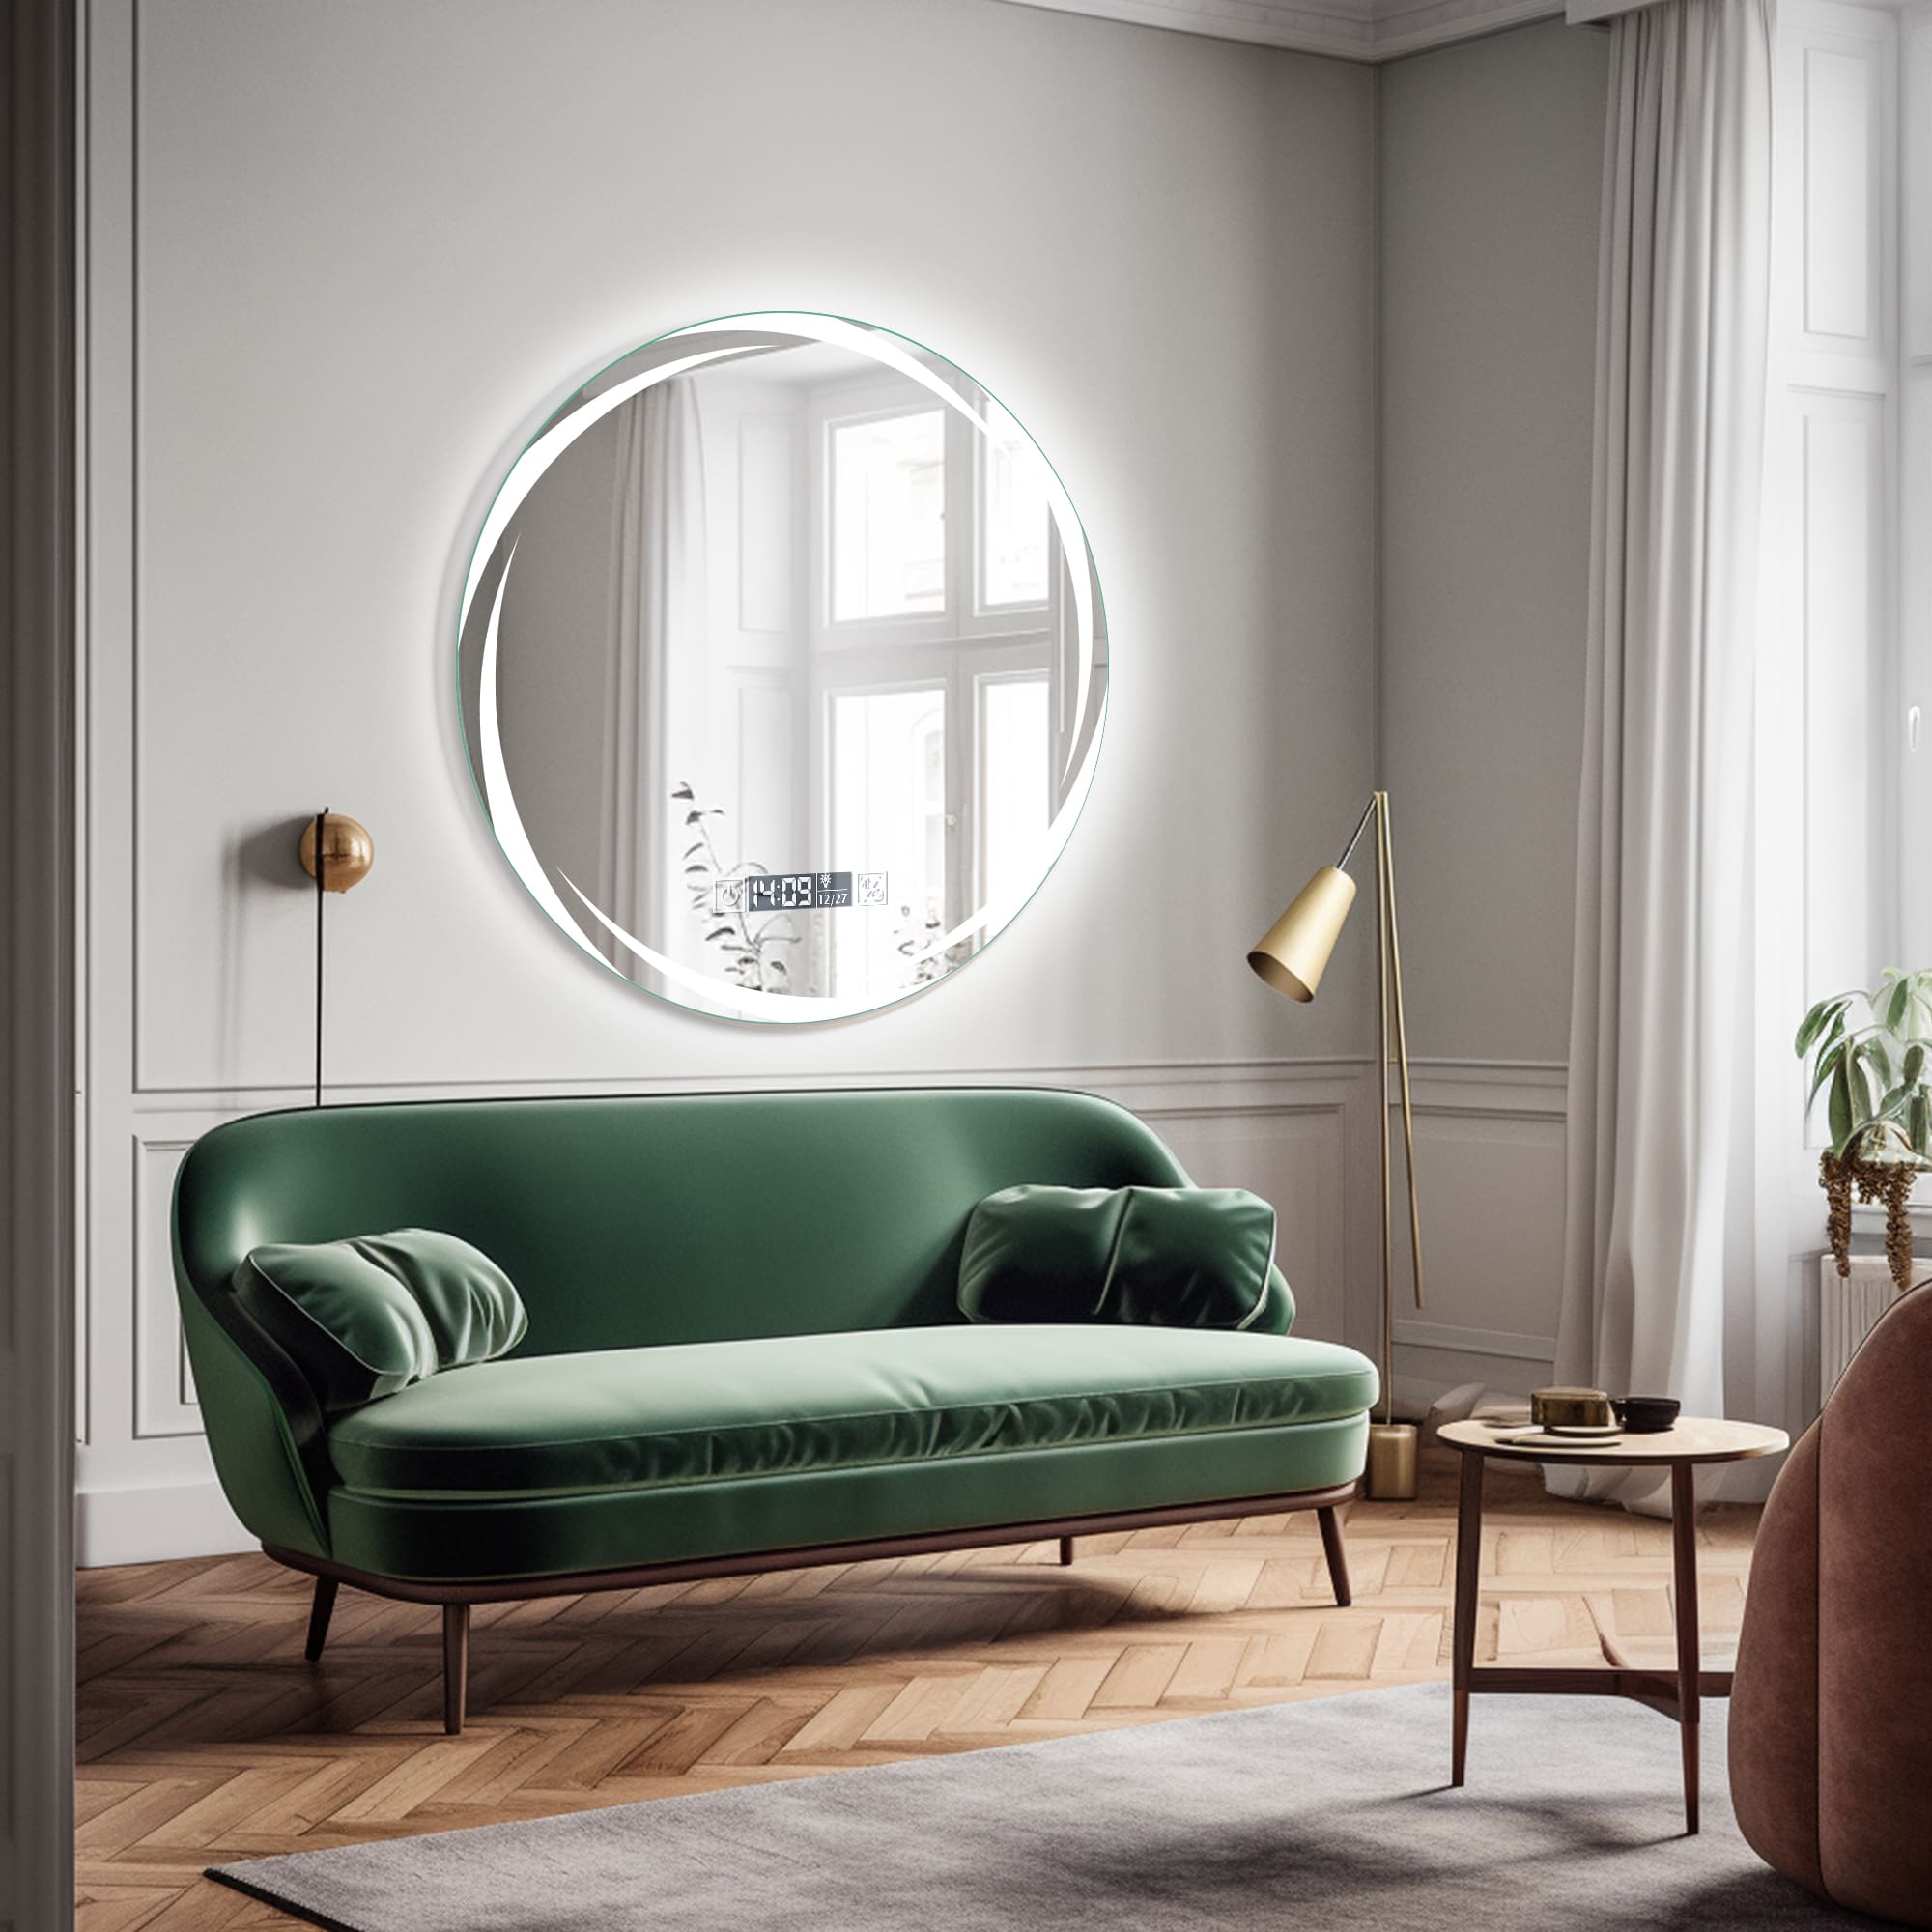 ORION LED mirror for living room